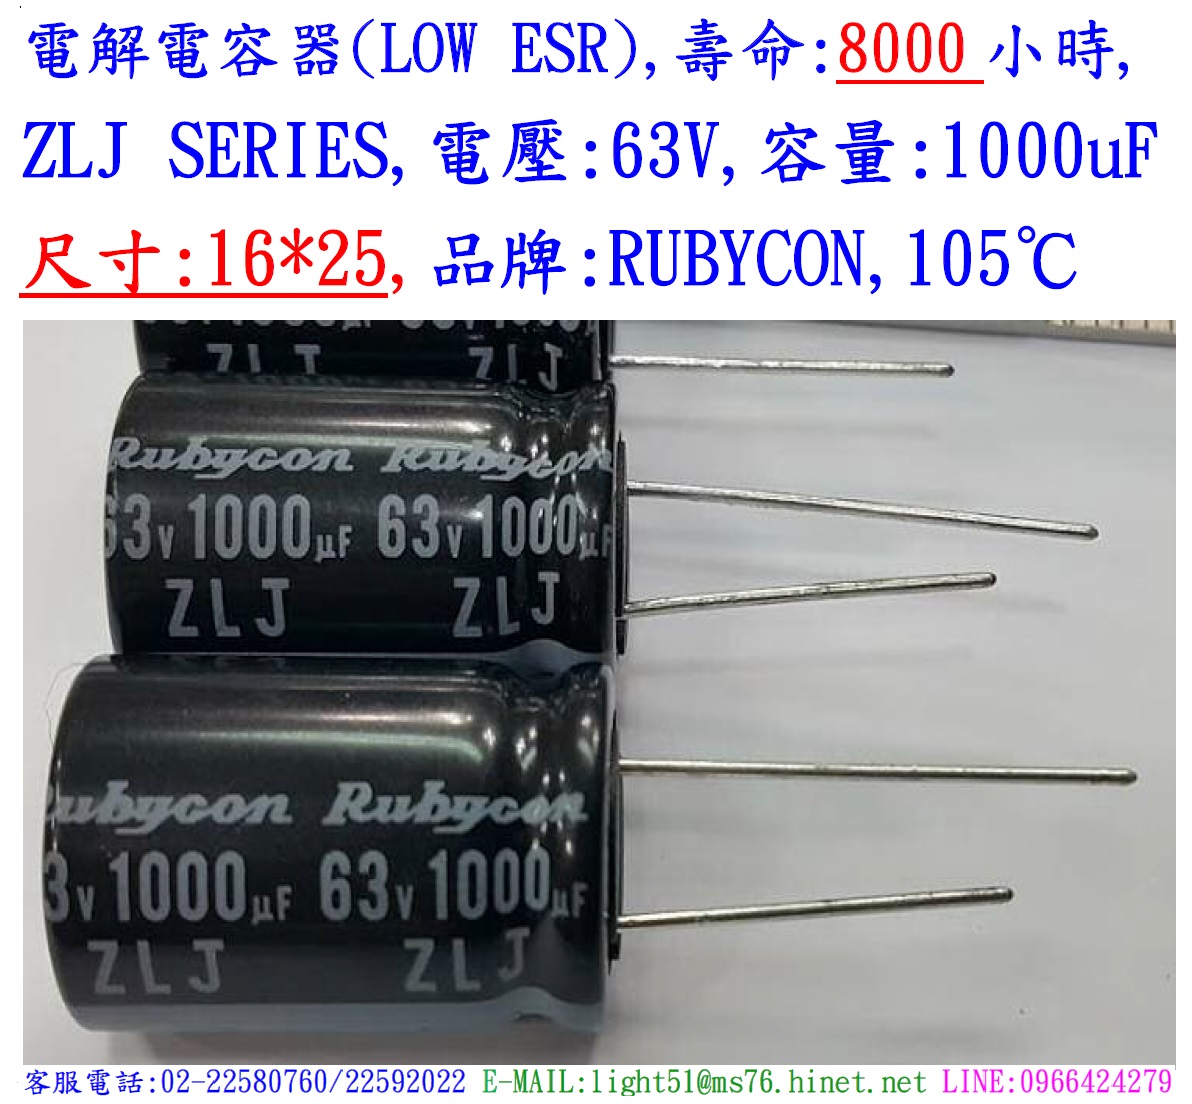 ZLJ,63V,1000uF,尺寸:16*25,電解電容器(LOW ESR),壽命:10000小時,Rubycon